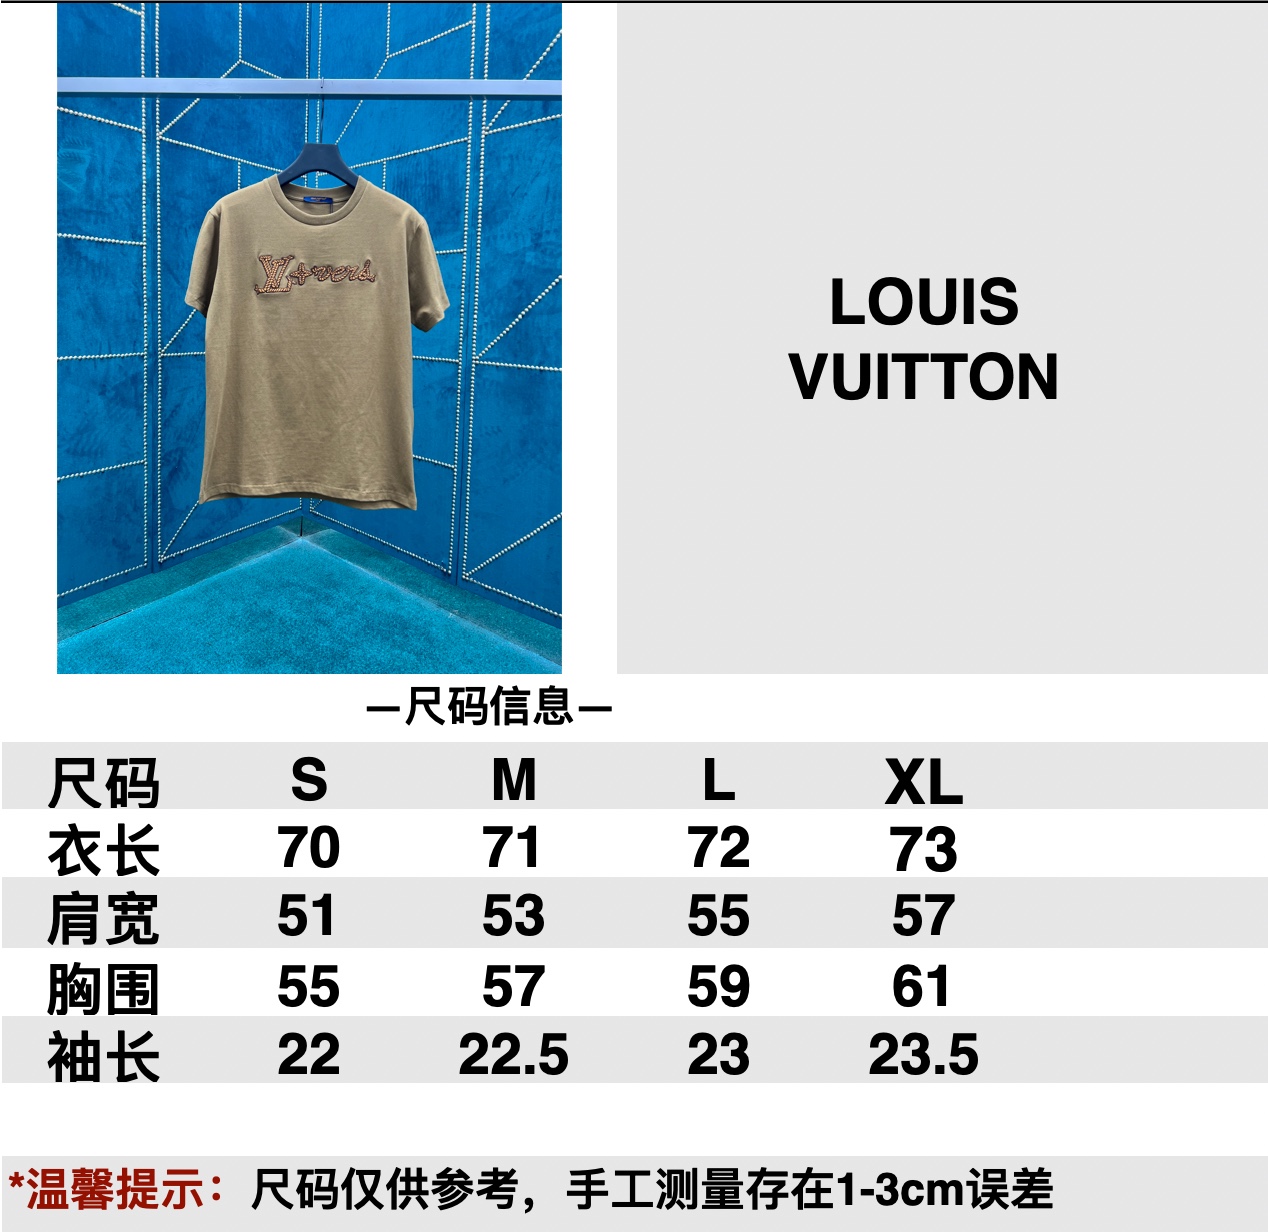 Louis Vuitton Perfecte kwaliteit